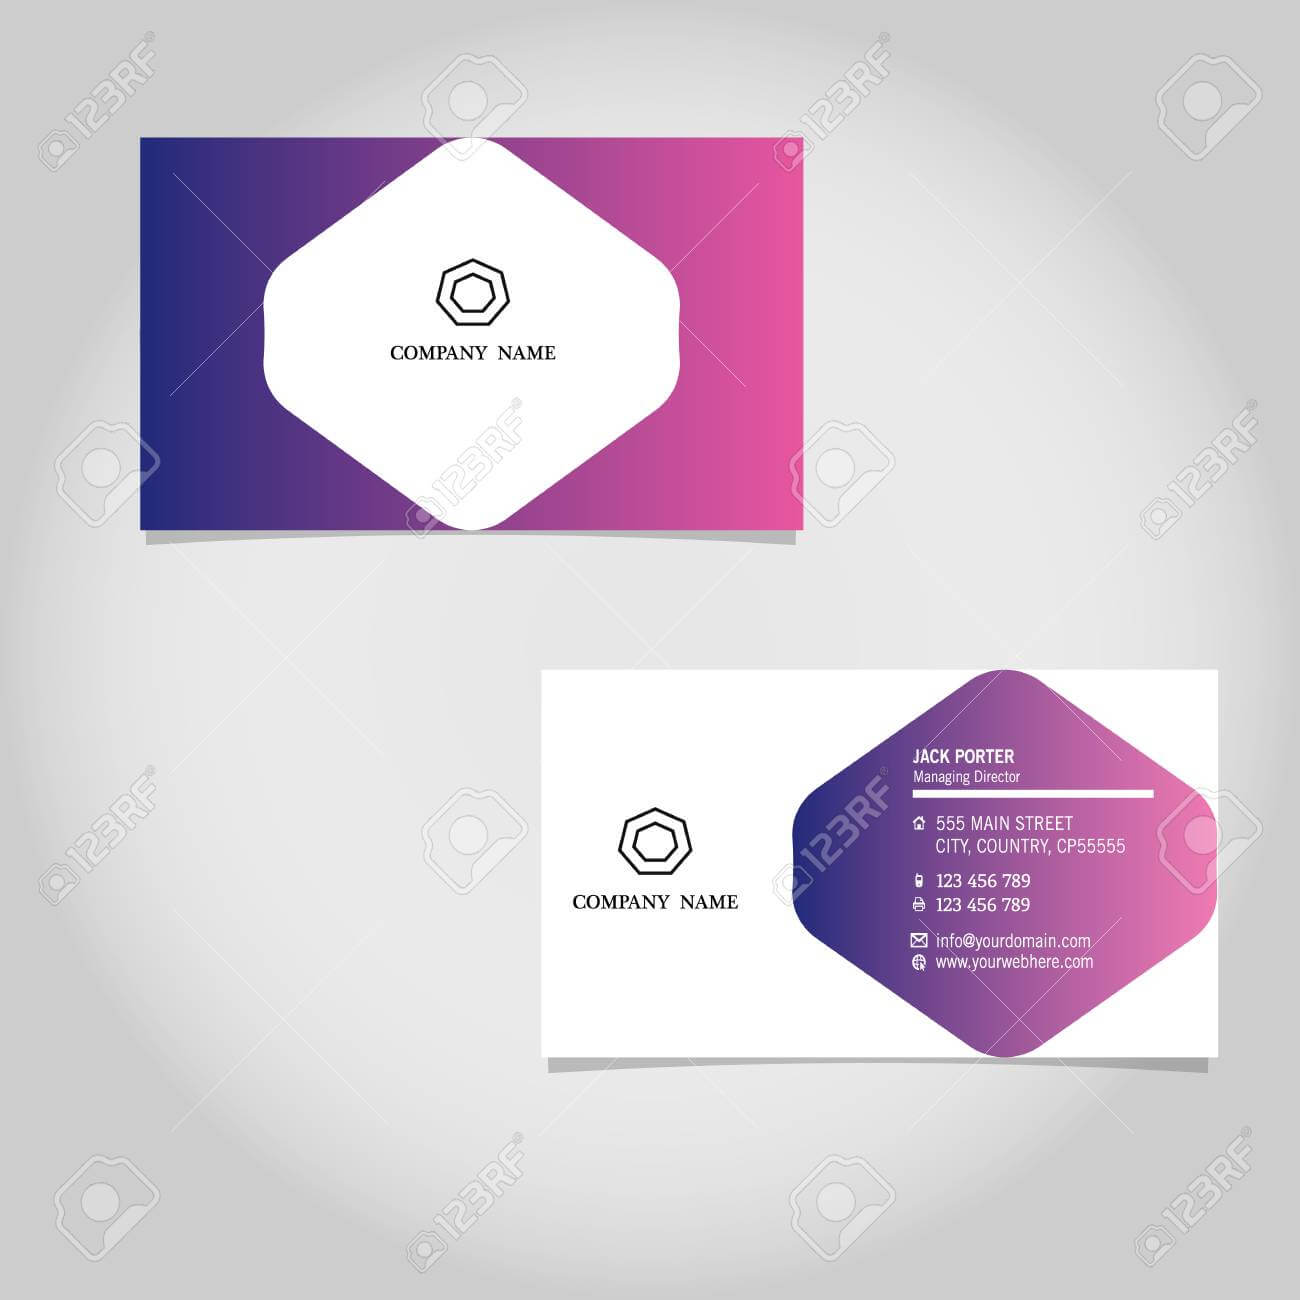 Vector Business Card Template Design Adobe Illustrator With Regard To Adobe Illustrator Business Card Template